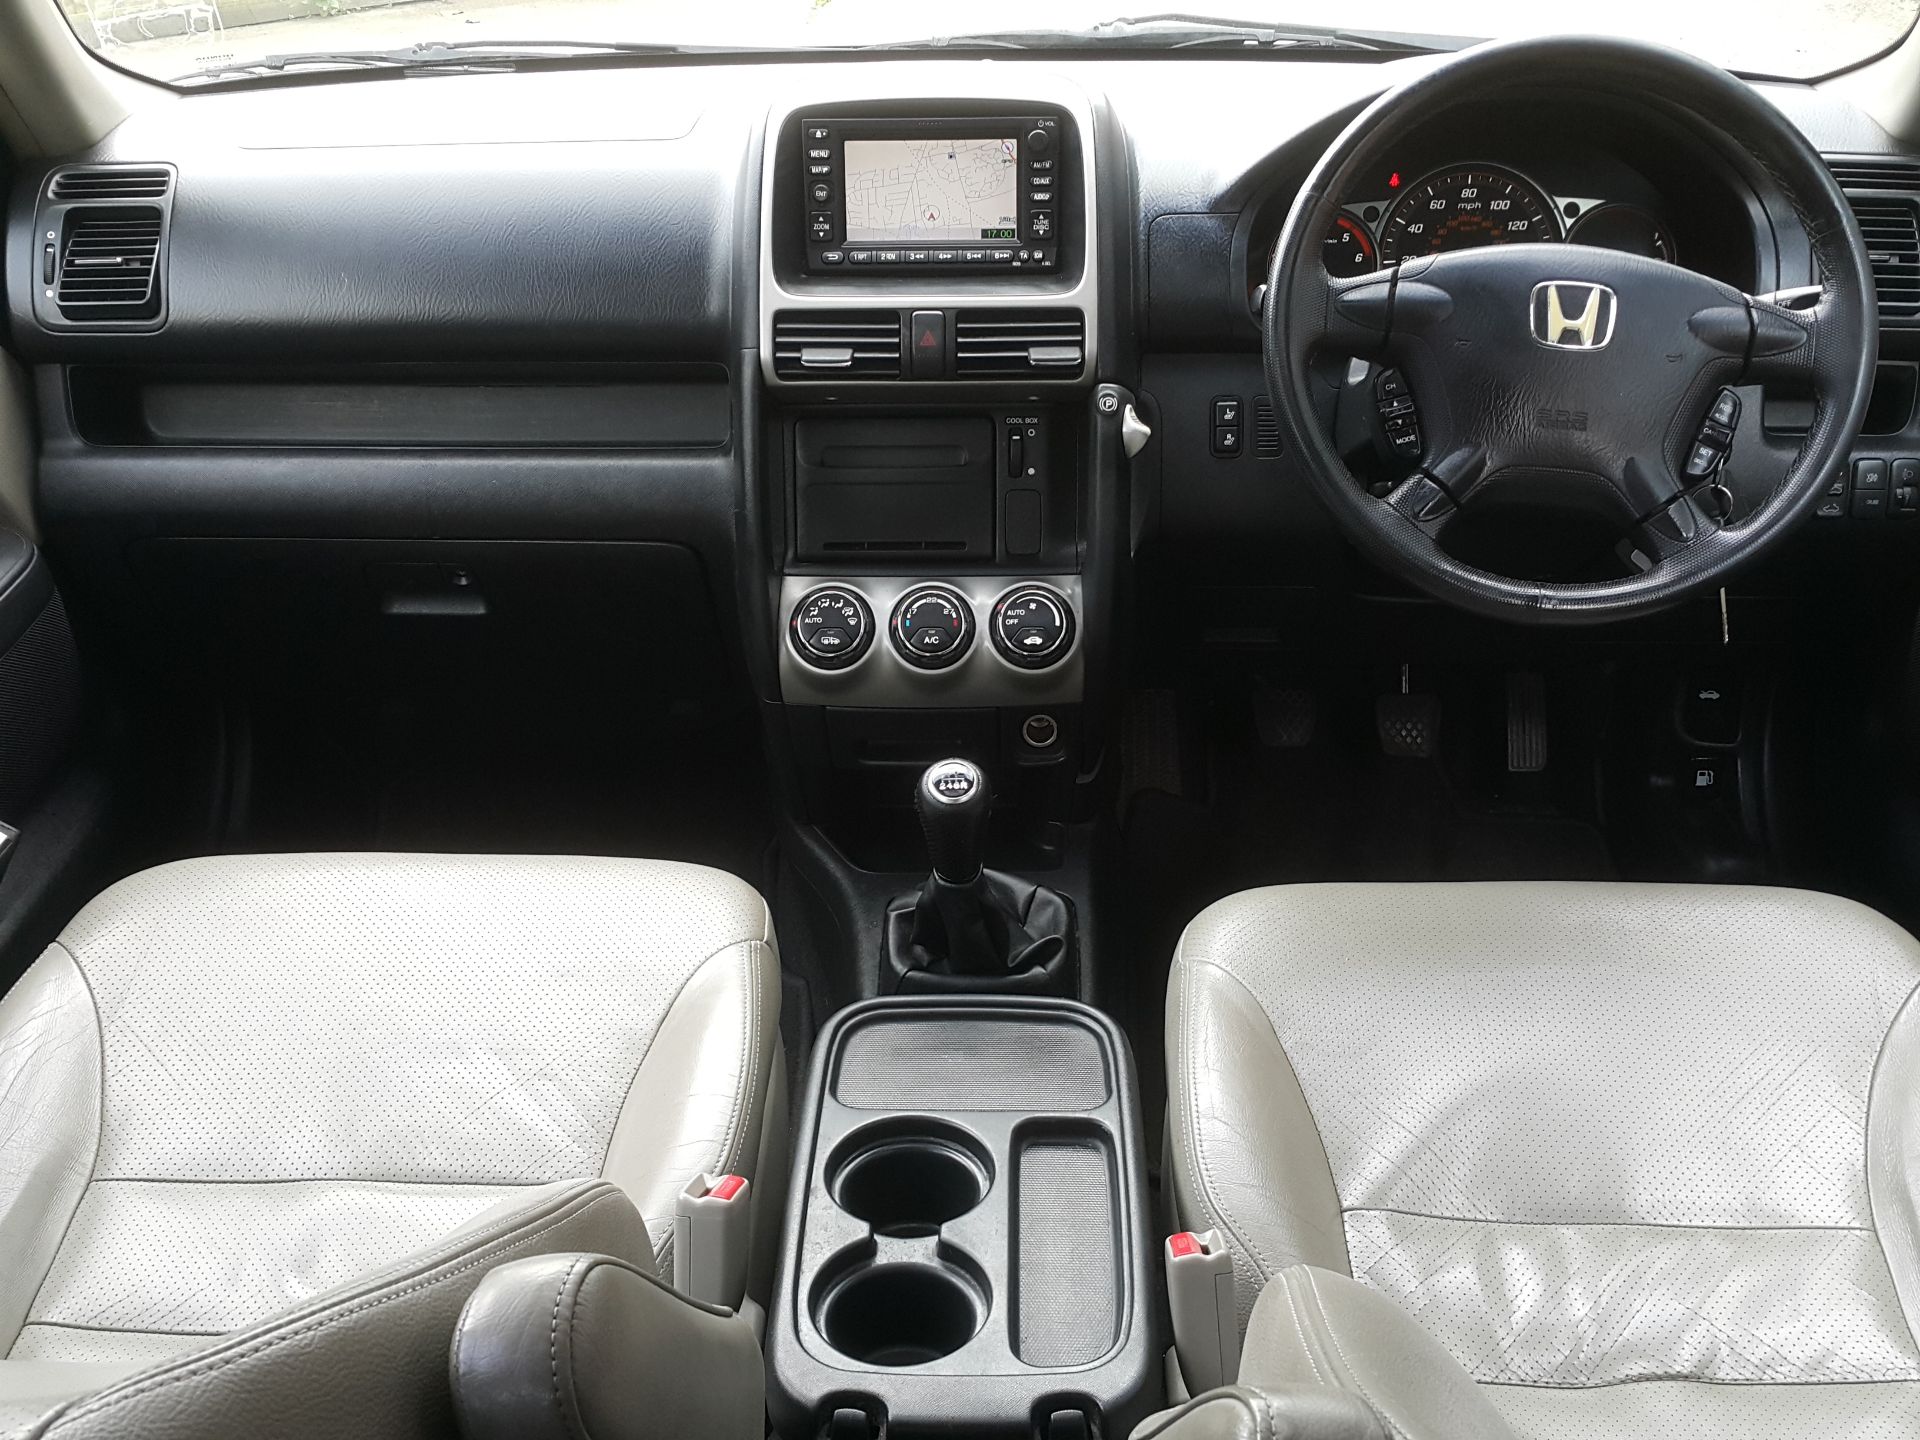 Honda CRV 2.2i CDTI Executive - 4x4, Manual, Diesel, 135000 Miles, MOT'd Until Sep 2018 - Image 9 of 20